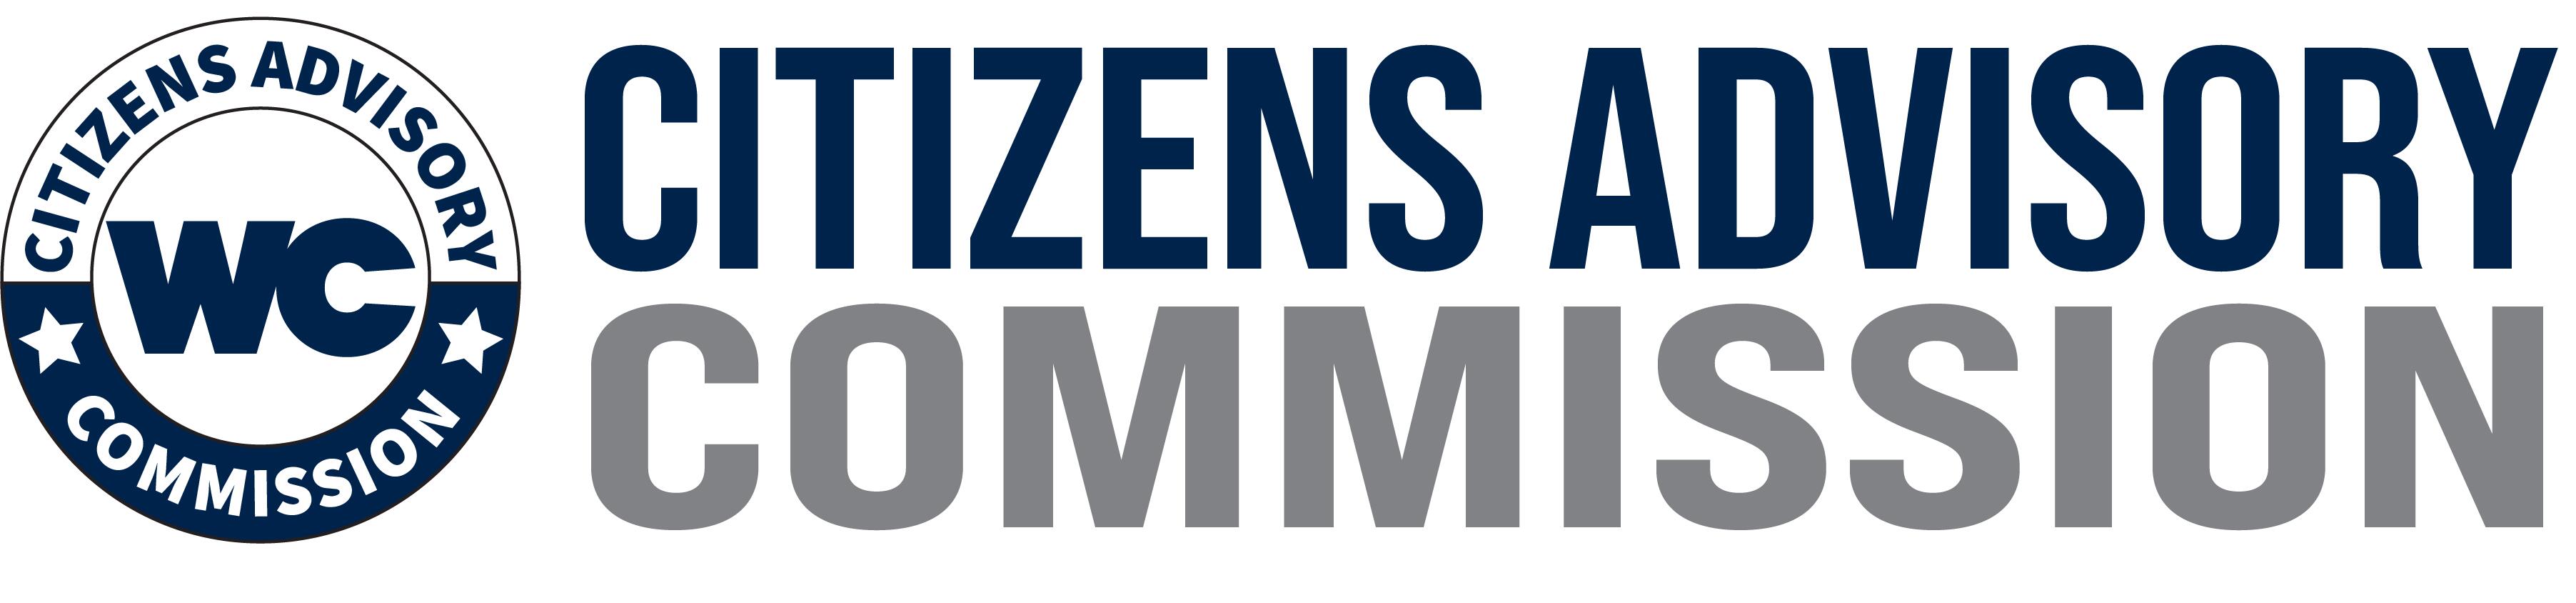 Citizens Advisory Commission